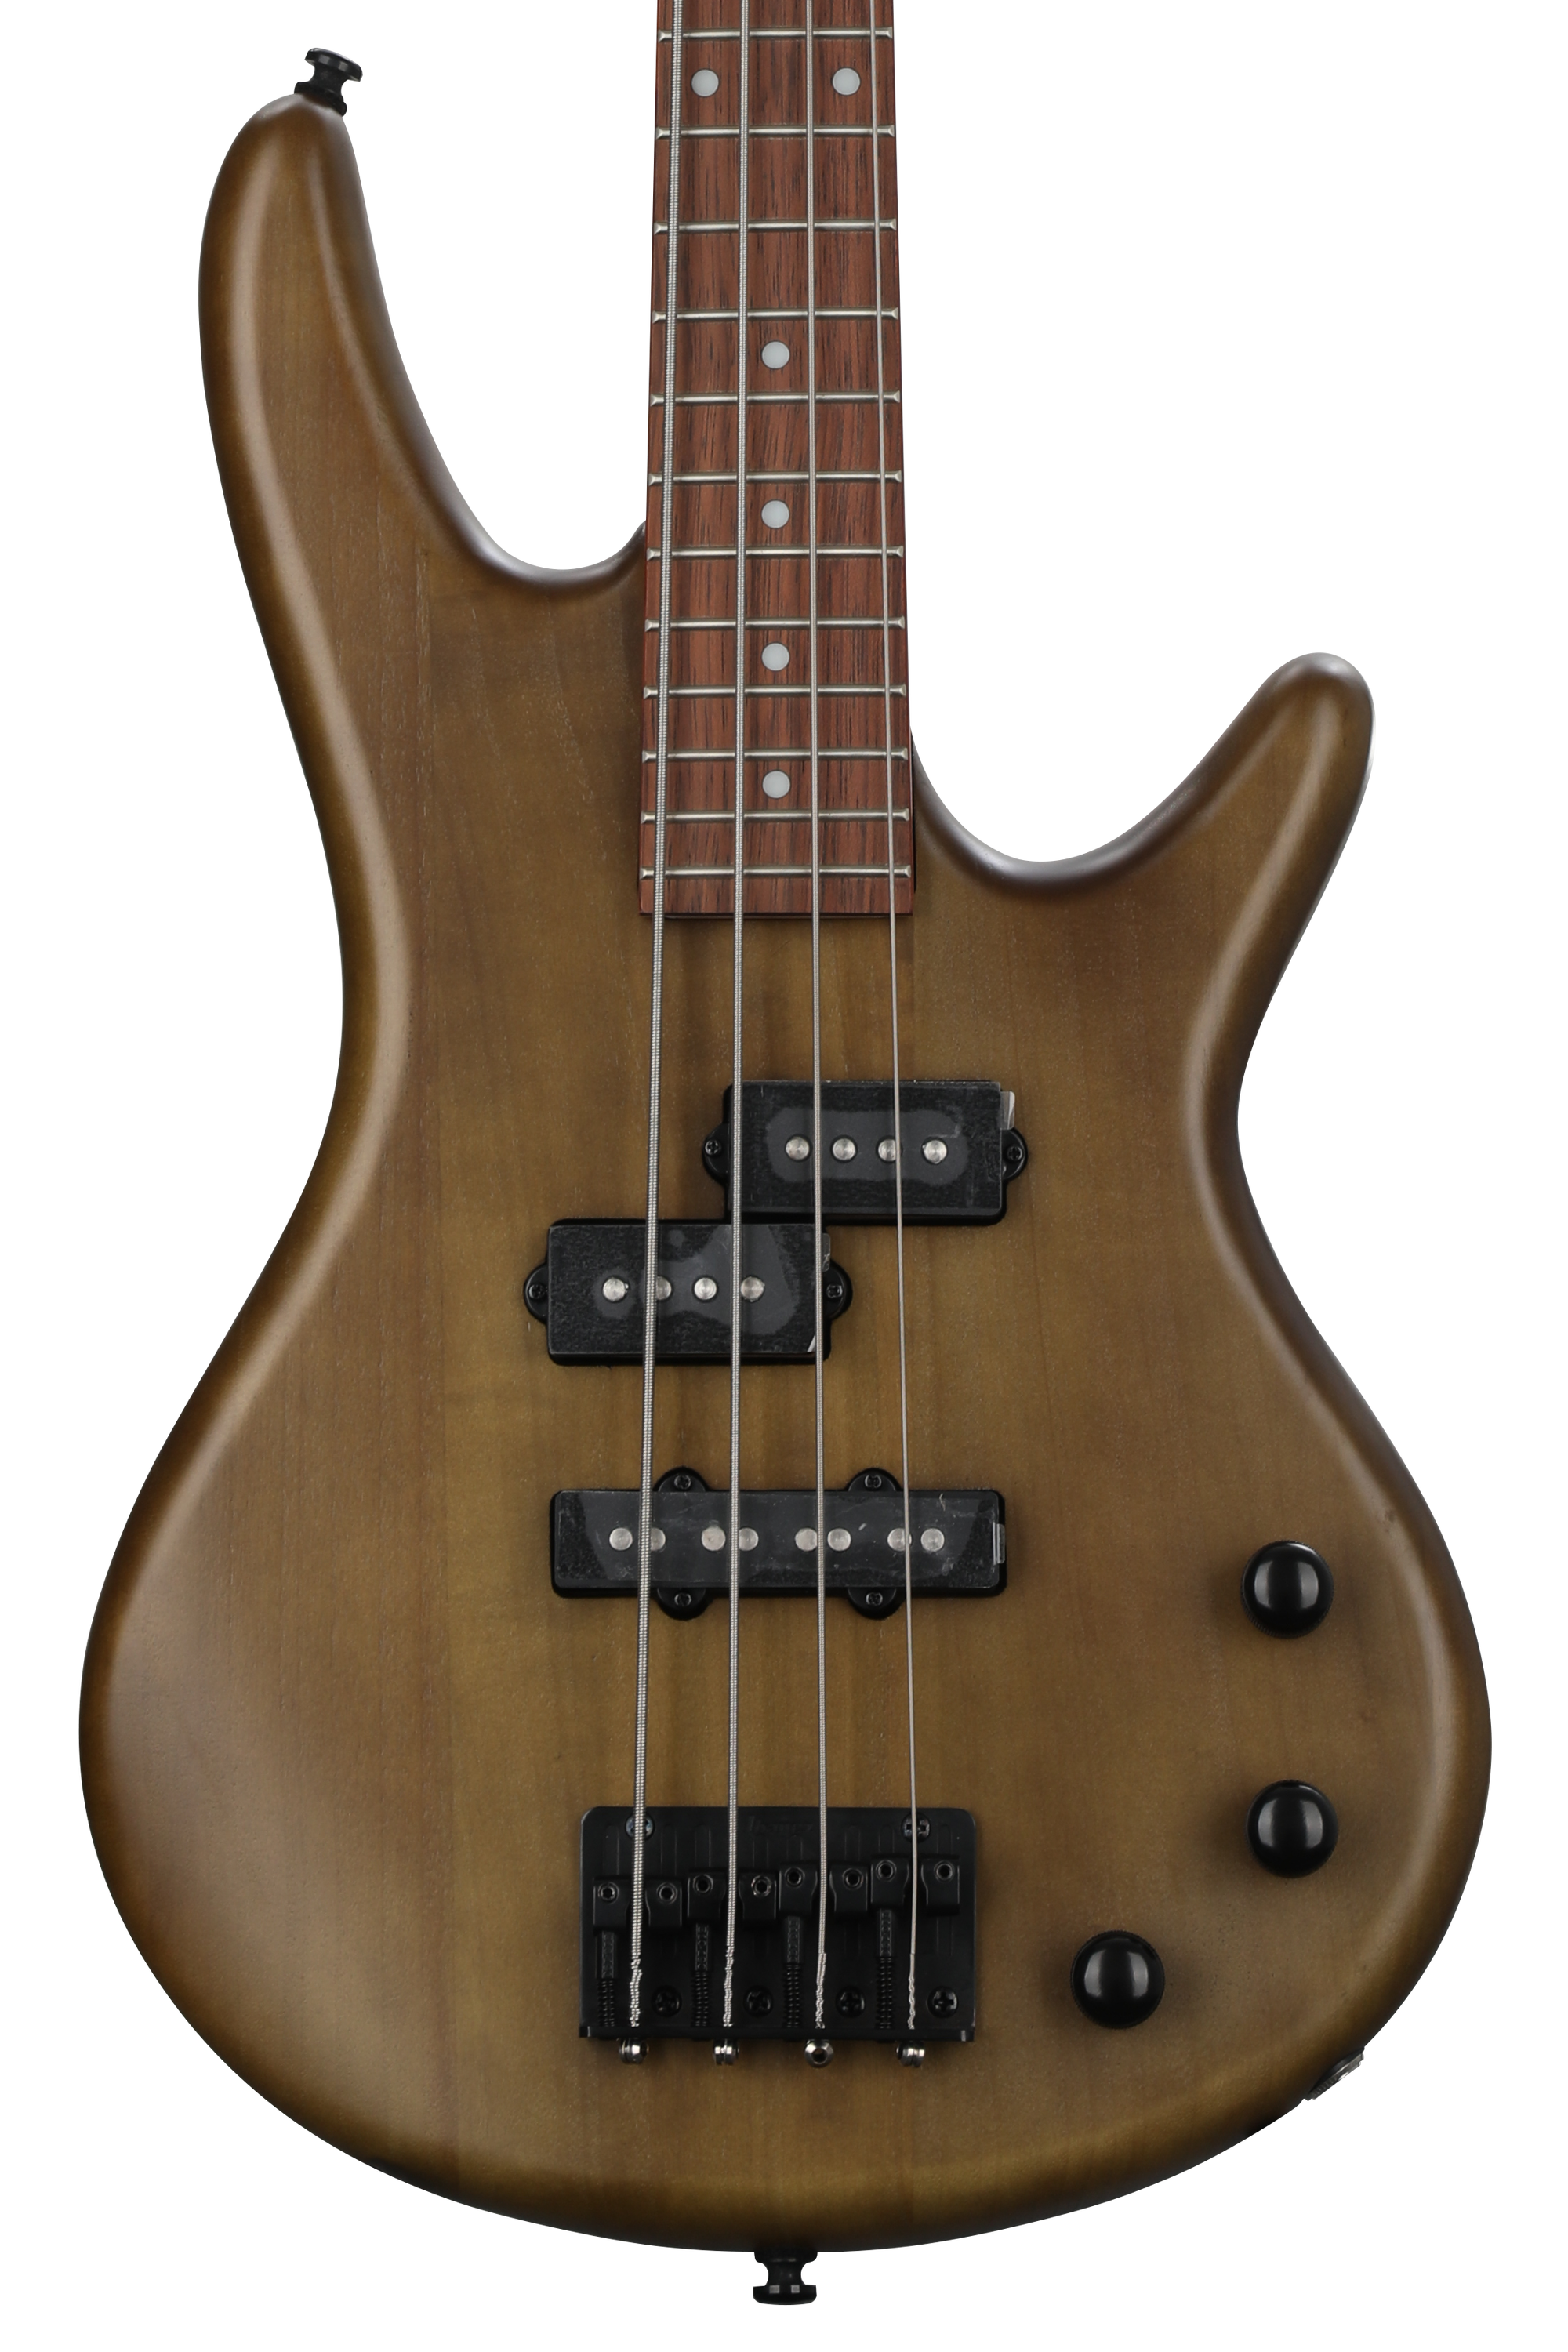 Bundled Item: Ibanez miKro GSRM20 Bass Guitar - Walnut Flat